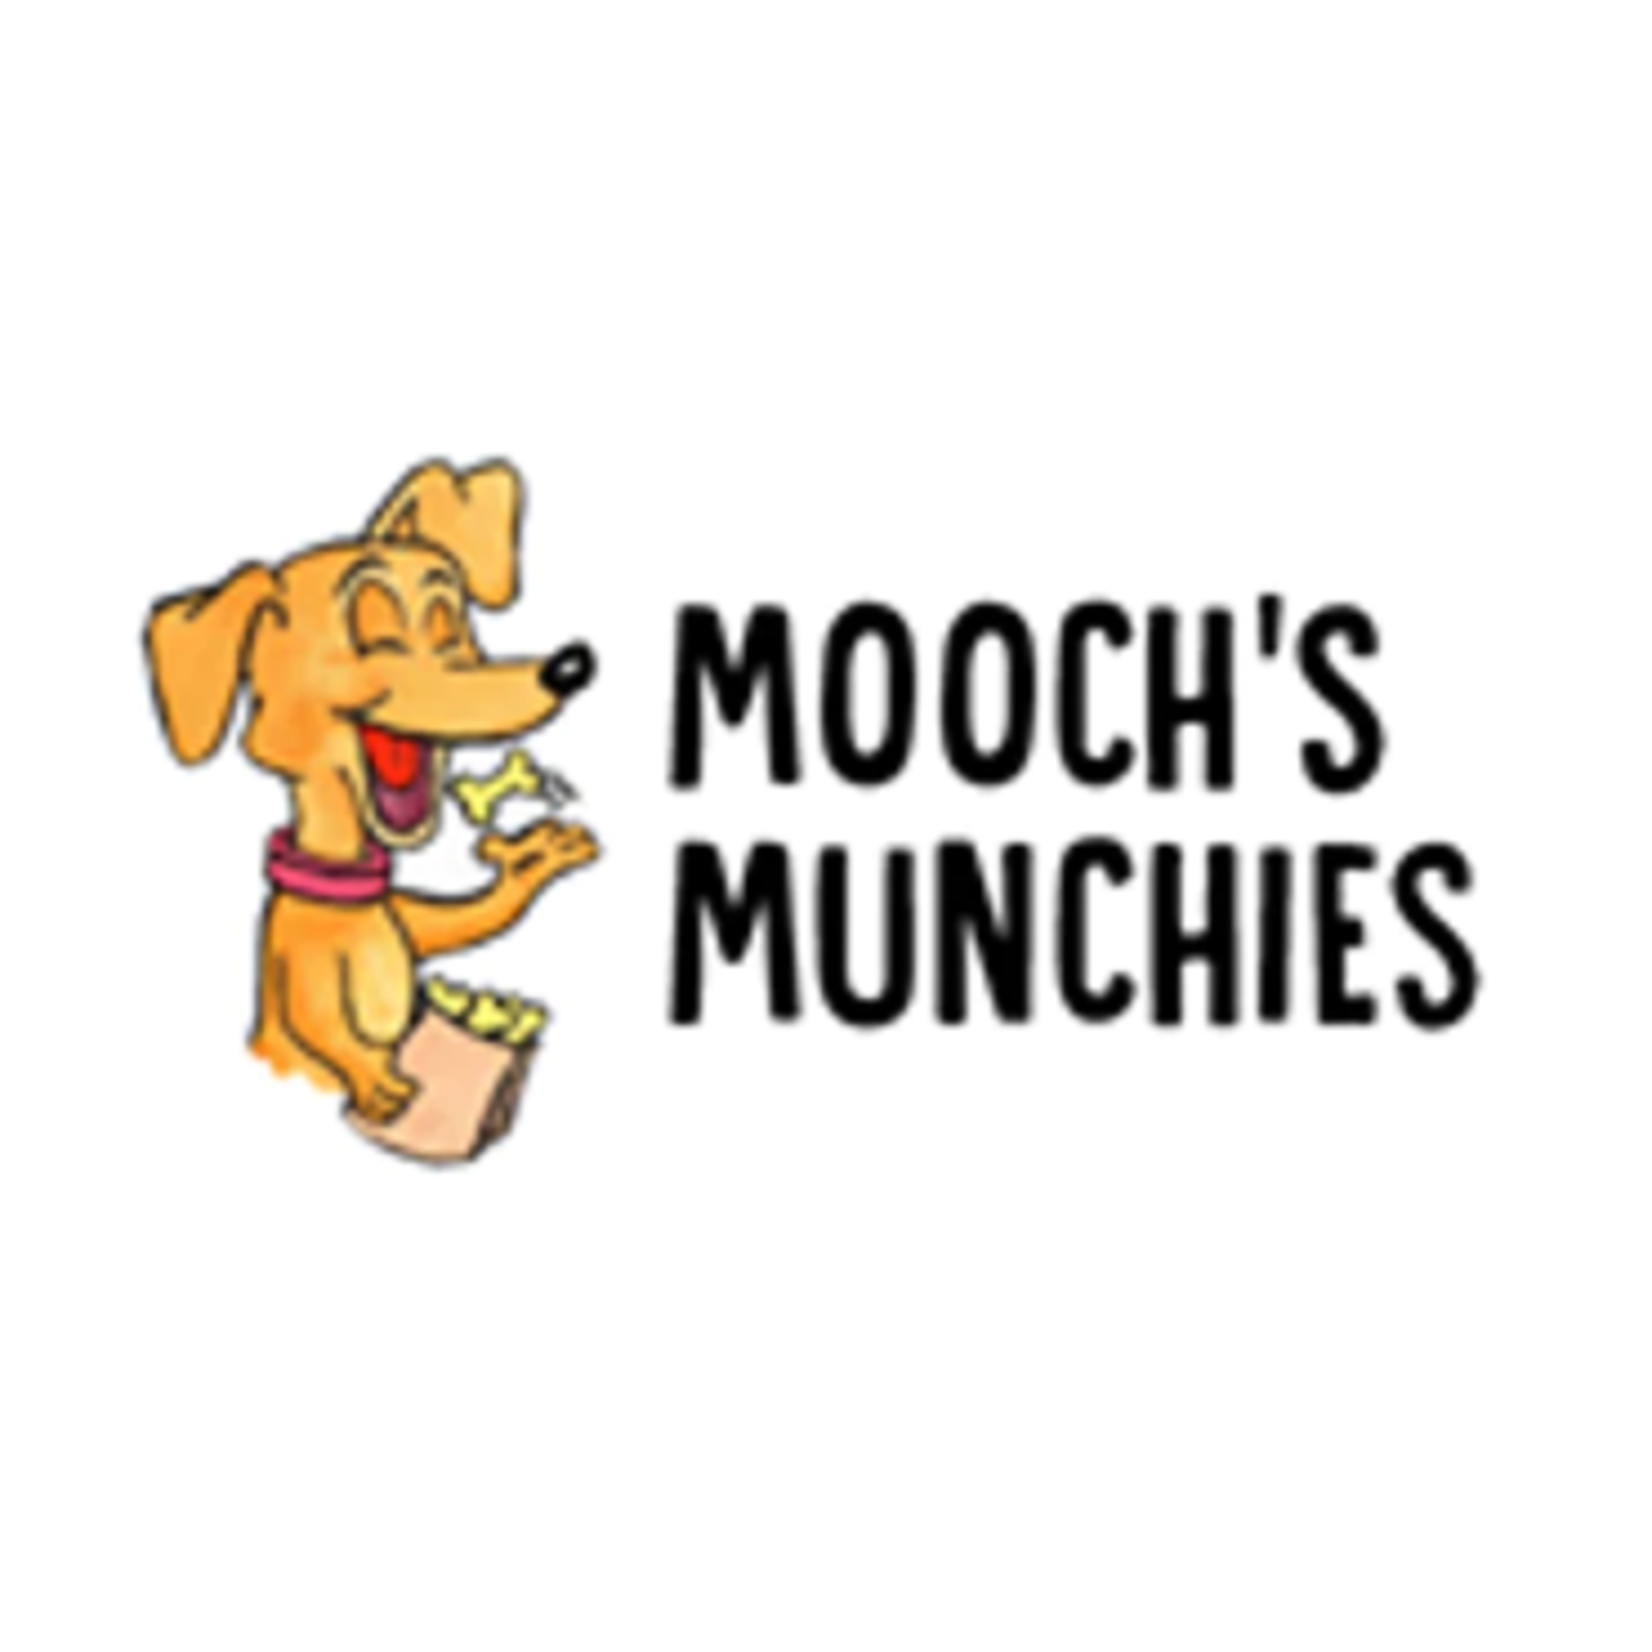 Mooch's Munchies Mooch's Munchies $10 - Store Merchandise